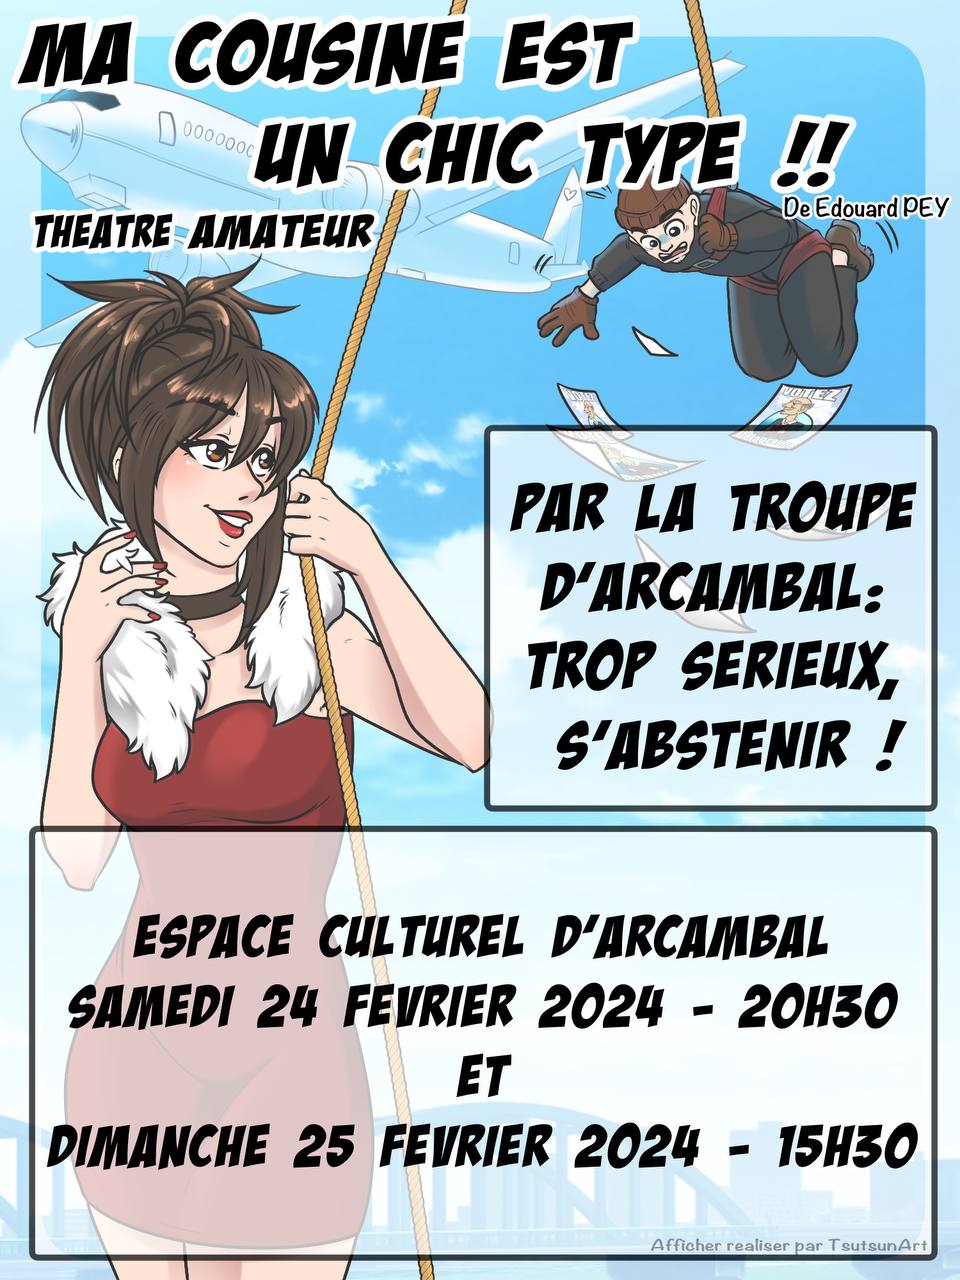 Théâtre amateur : "Ma cousine est un chic type" null France null null null null